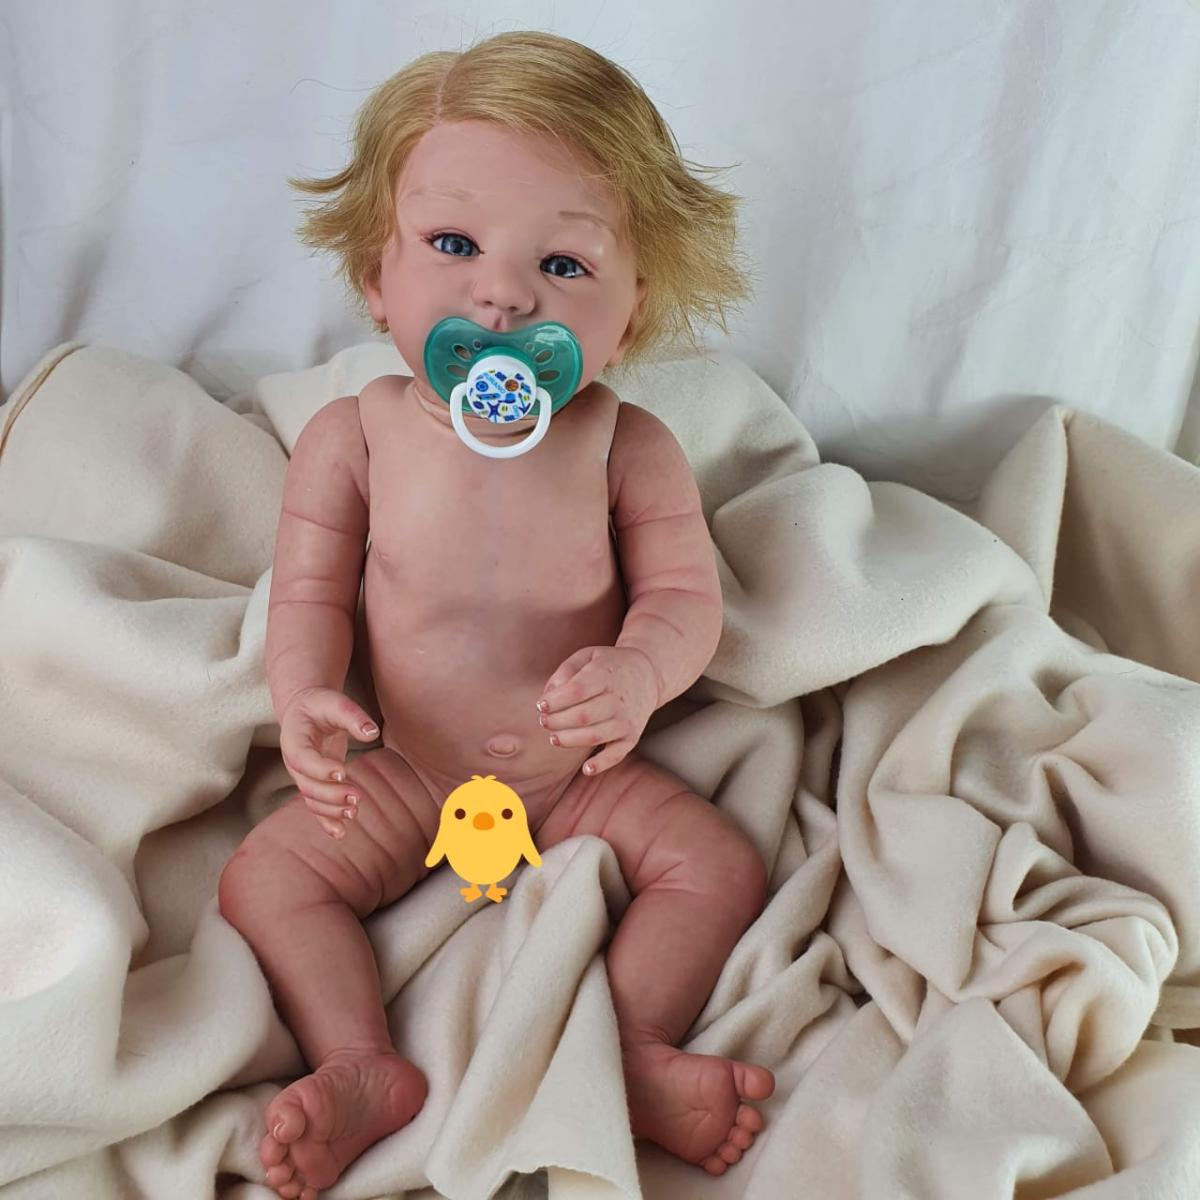 Bebê Reborn Menino Corpo Silicone : : Brinquedos e Jogos